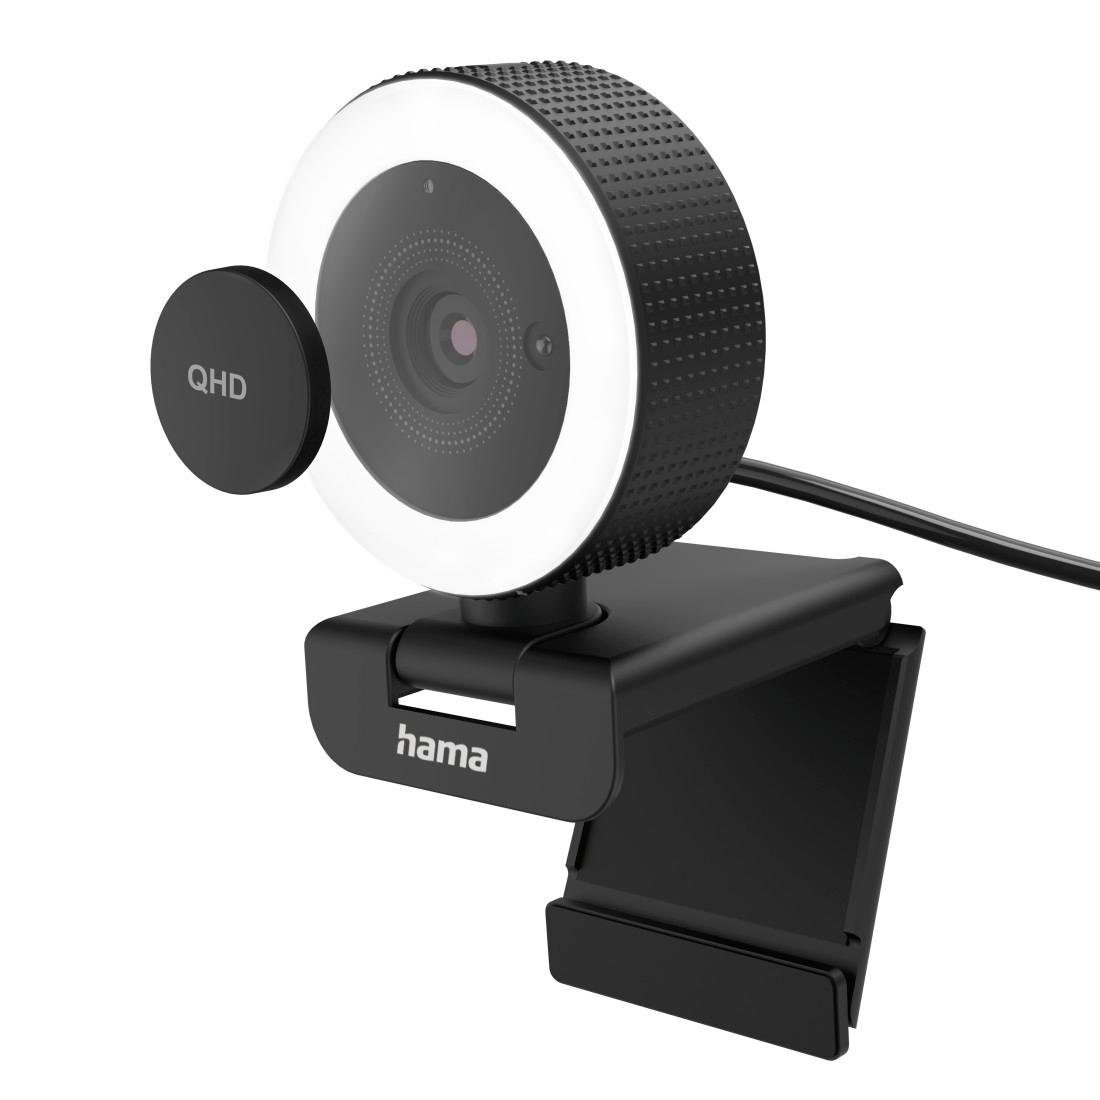 2560p, QHD, Mikrofon, bei Licht Webcam Bewegungen Bild, garantiert (QHD), USB, ein Autofokus auch Webcam (PC-Kamera mit Hama Fernbedienung) scharfes